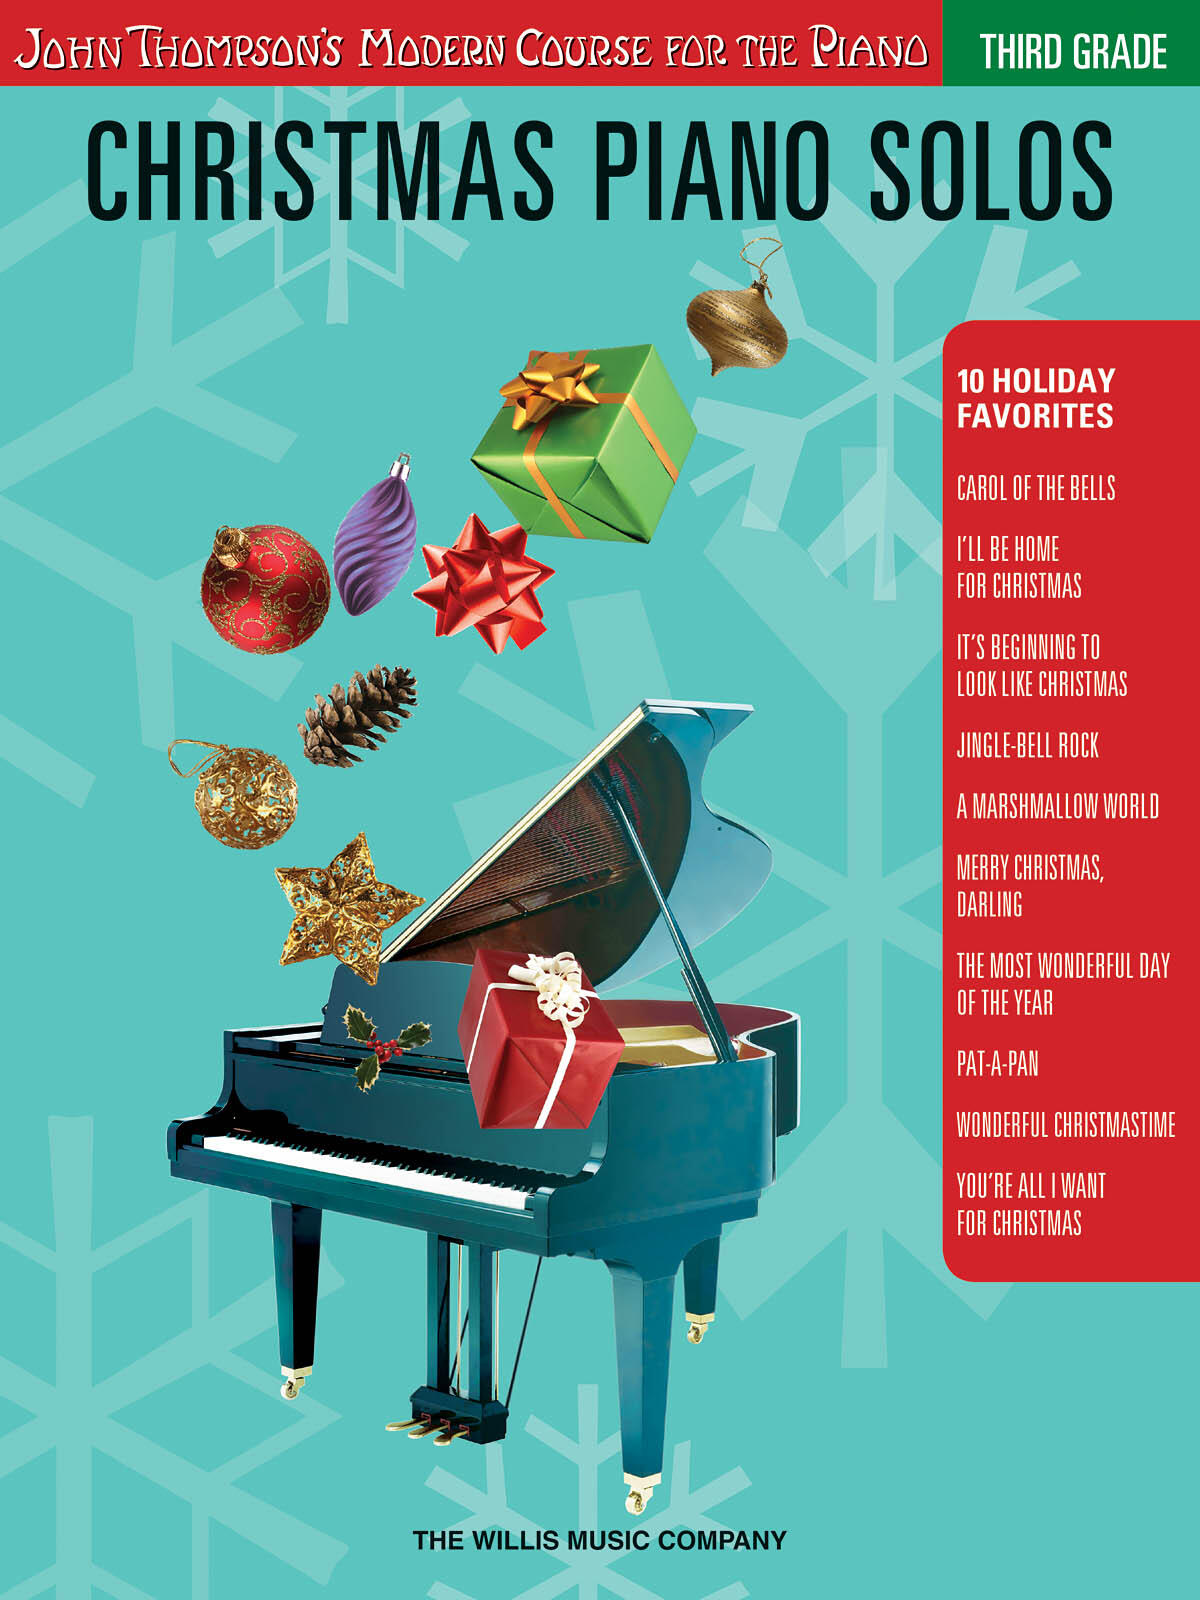 Christmas Piano Solos - Third Grade  Glenda Austin Klavier Buch HL00416789 (HL00416789) : photo 1